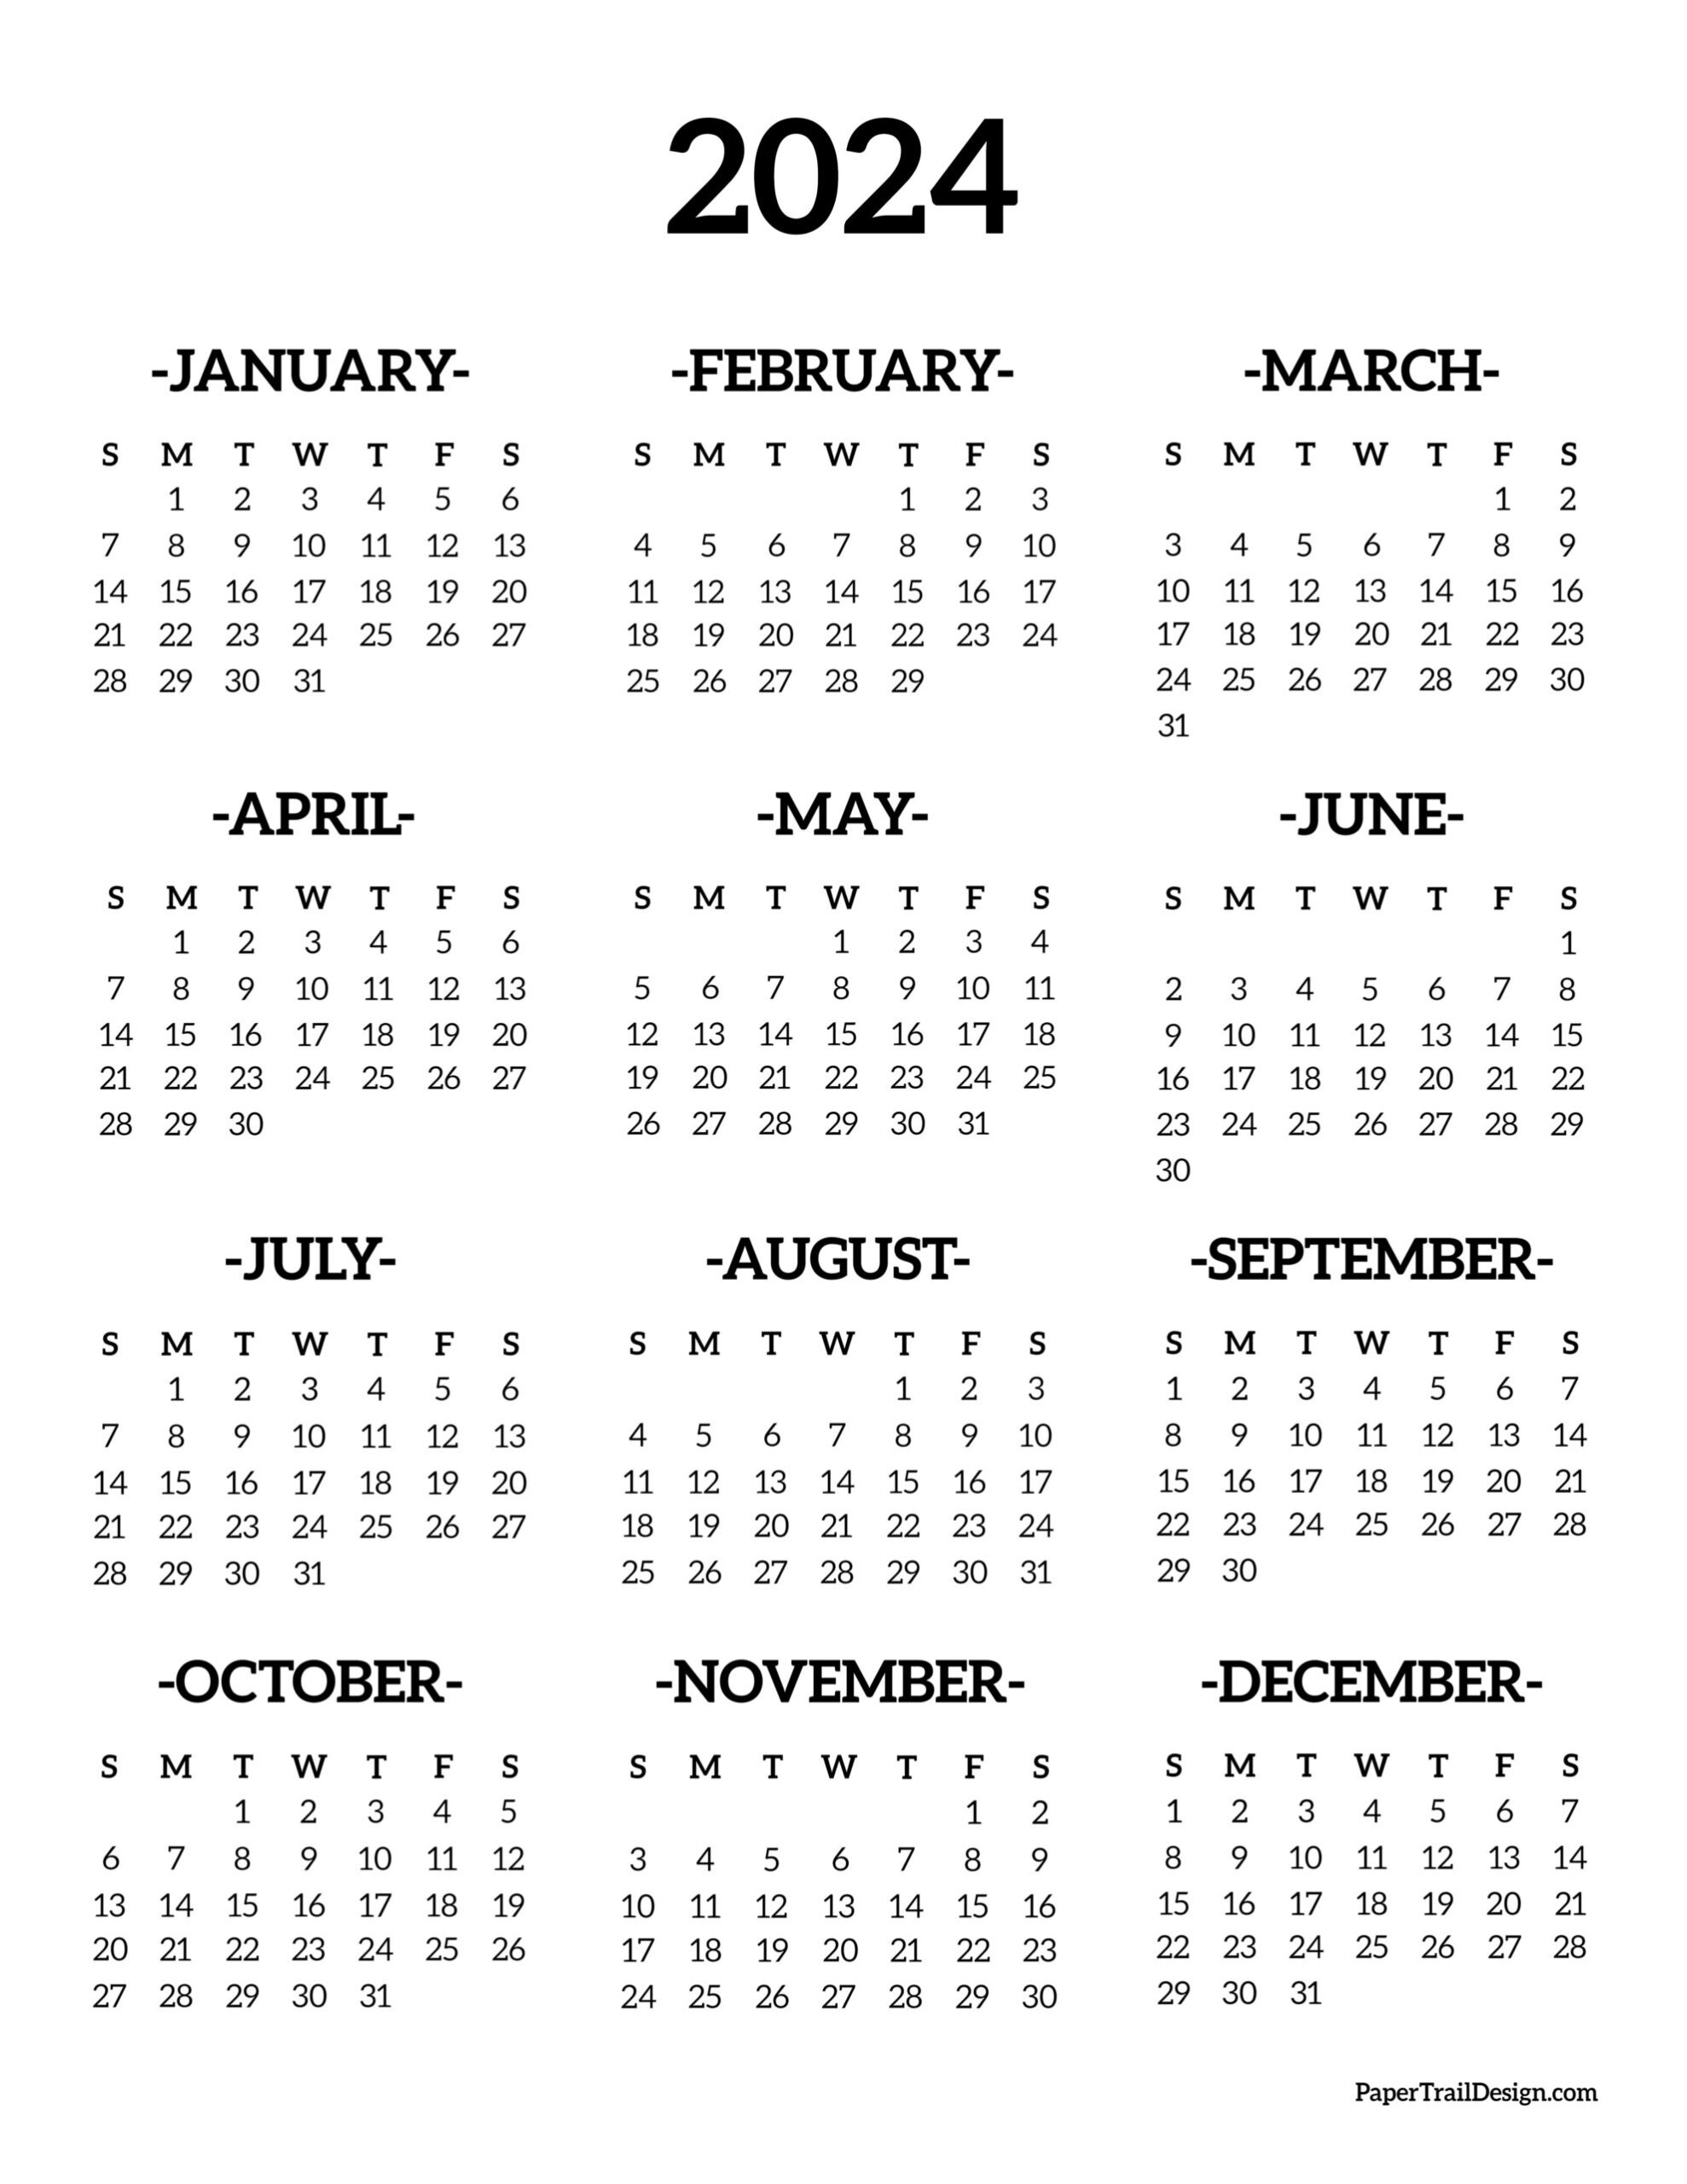 Calendar 2024 Printable One Page - Paper Trail Design | 2024 Calendar Template